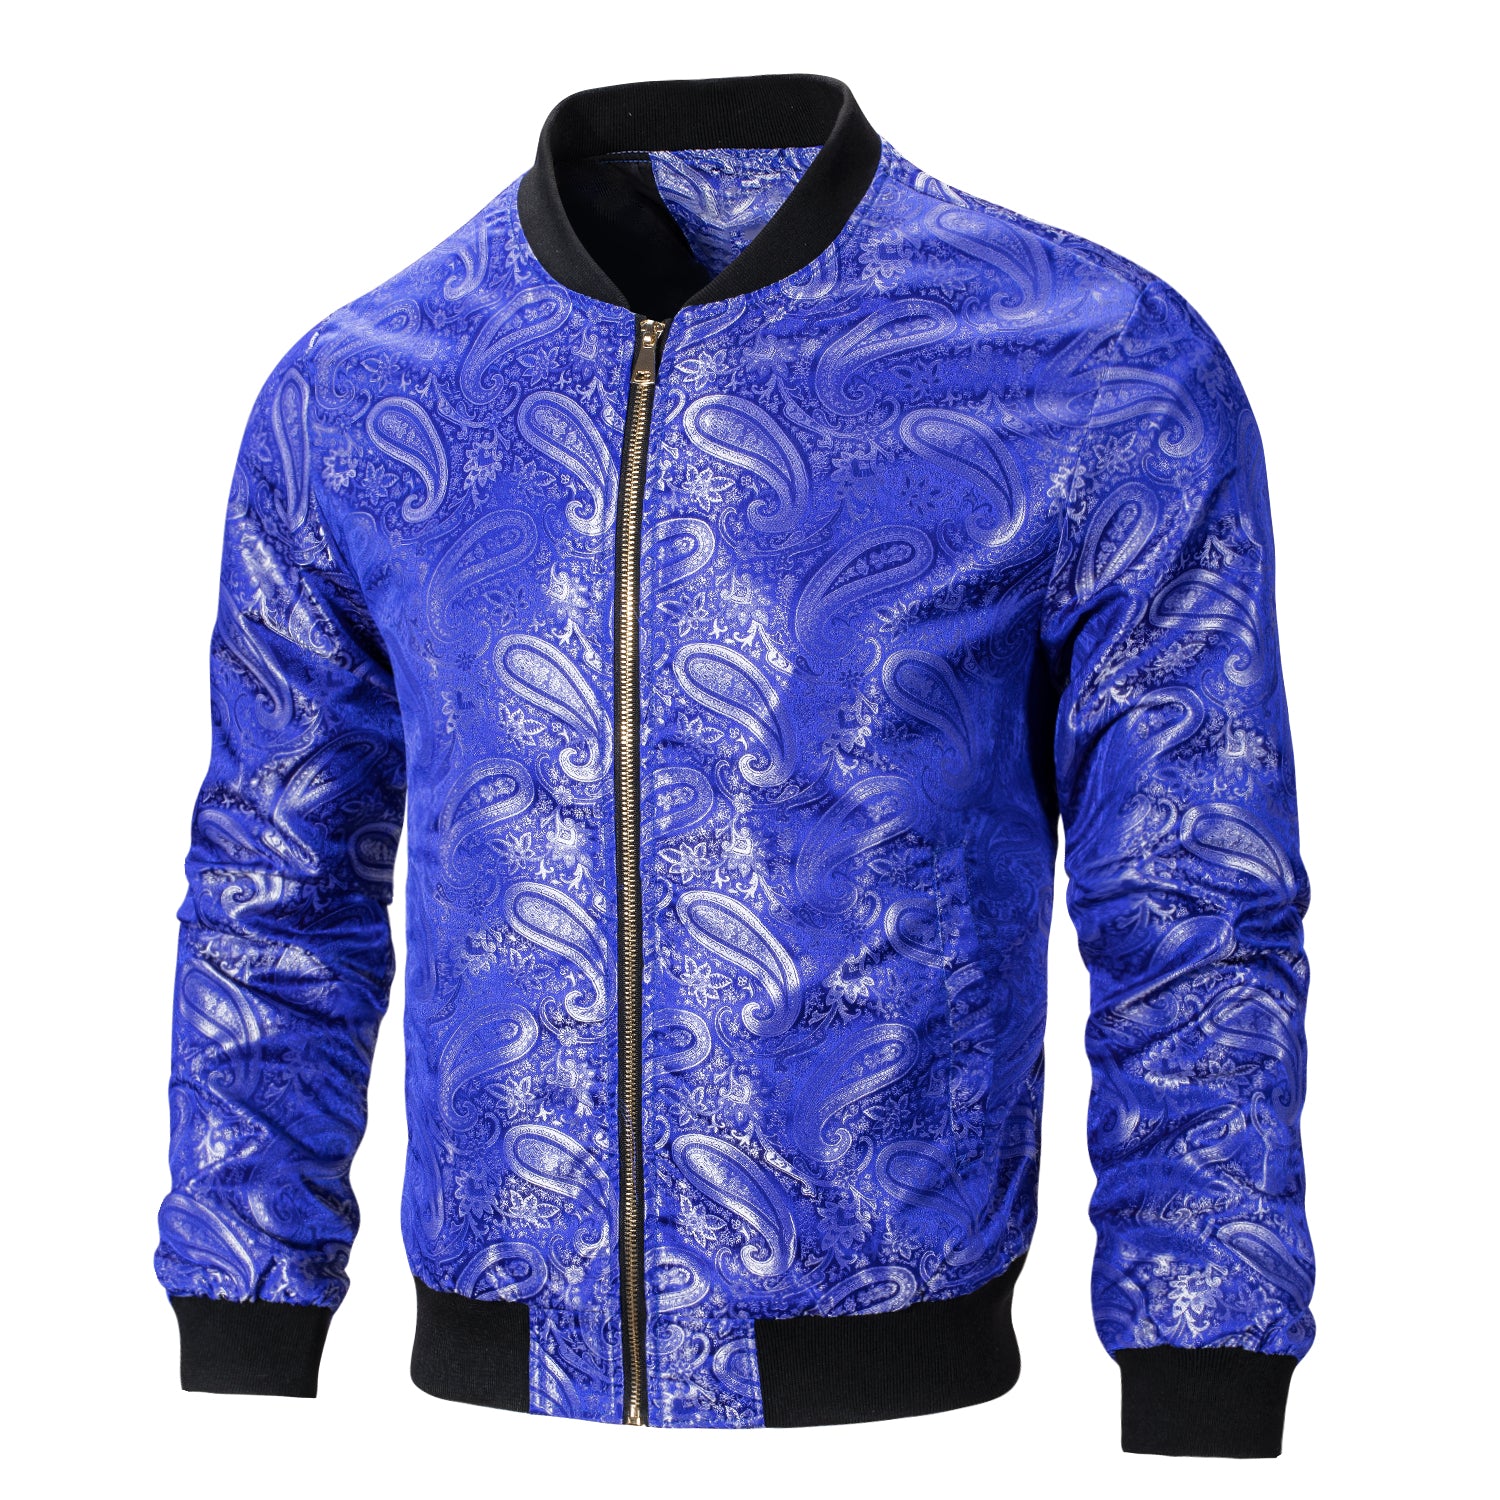 New Blue White Paisley Men's Urban Lightweight Zip Jacket Casual